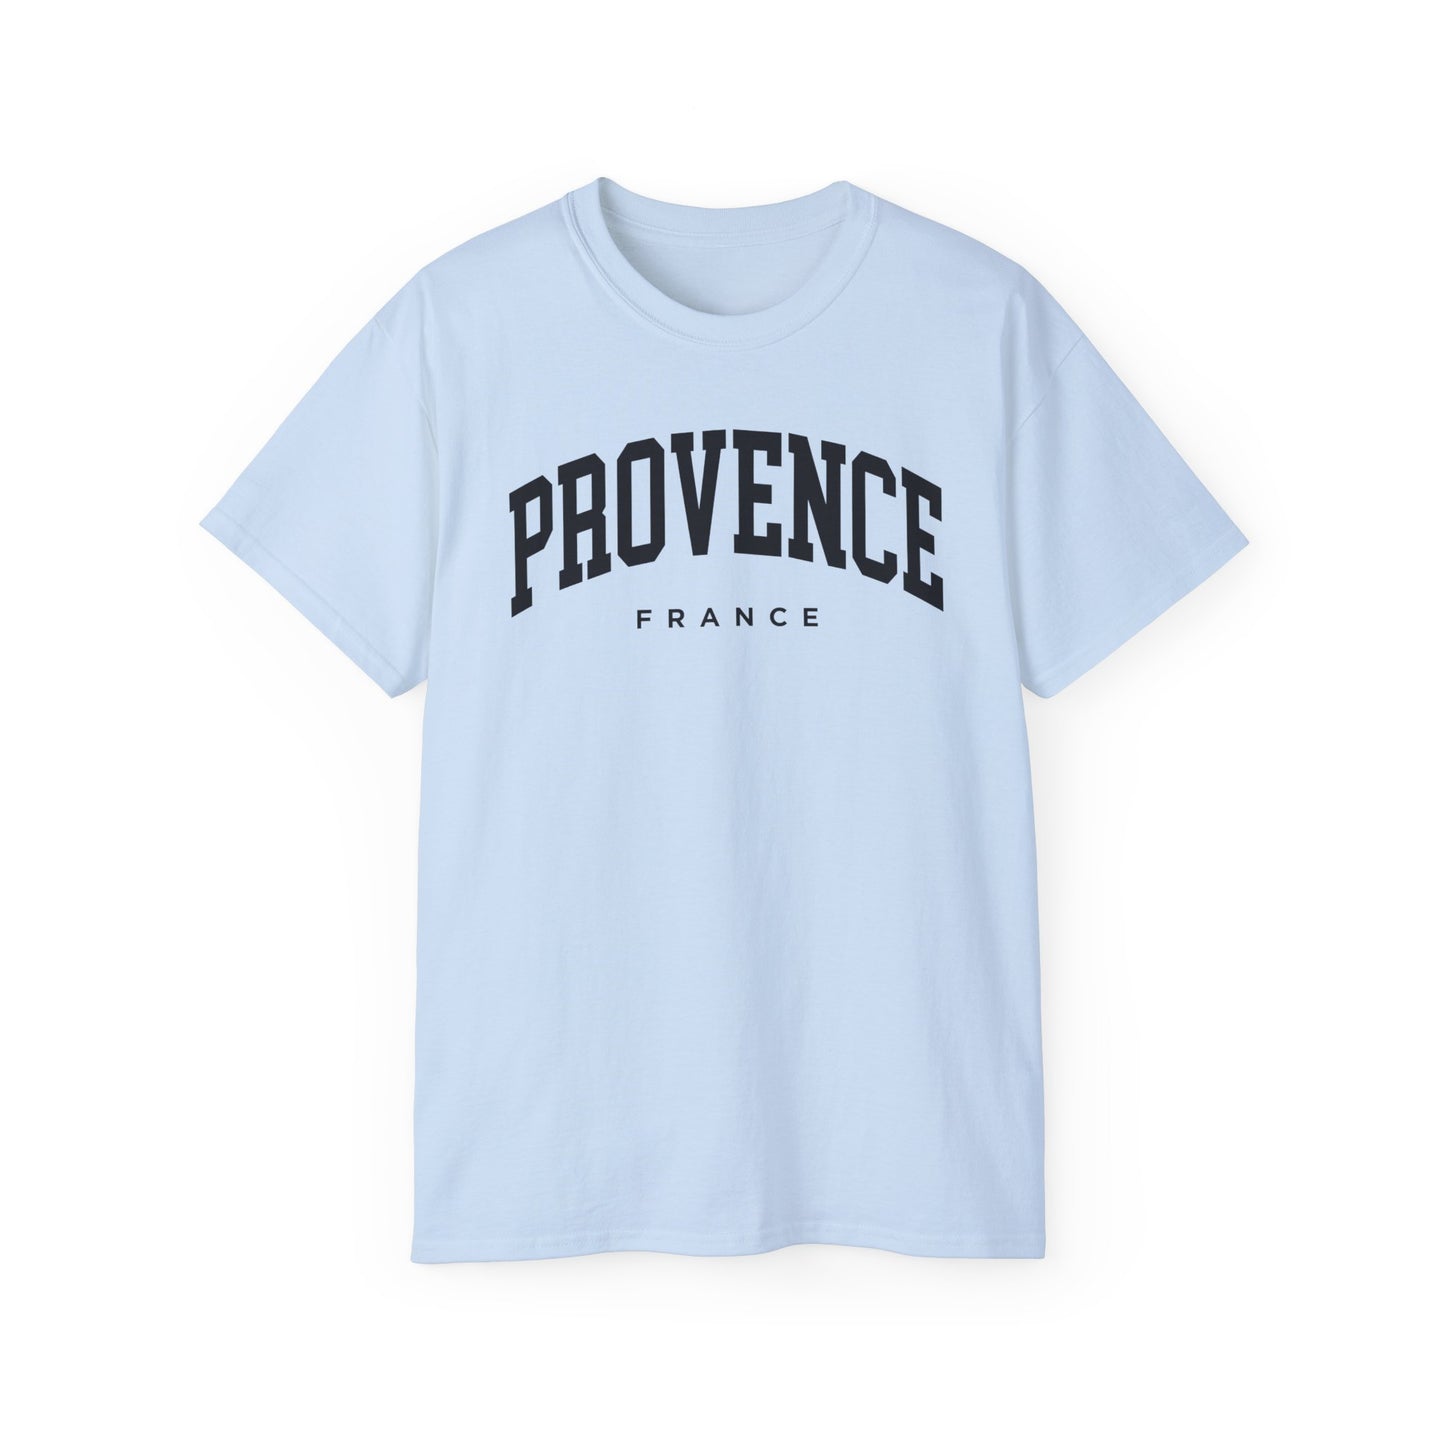 Provence France Tee